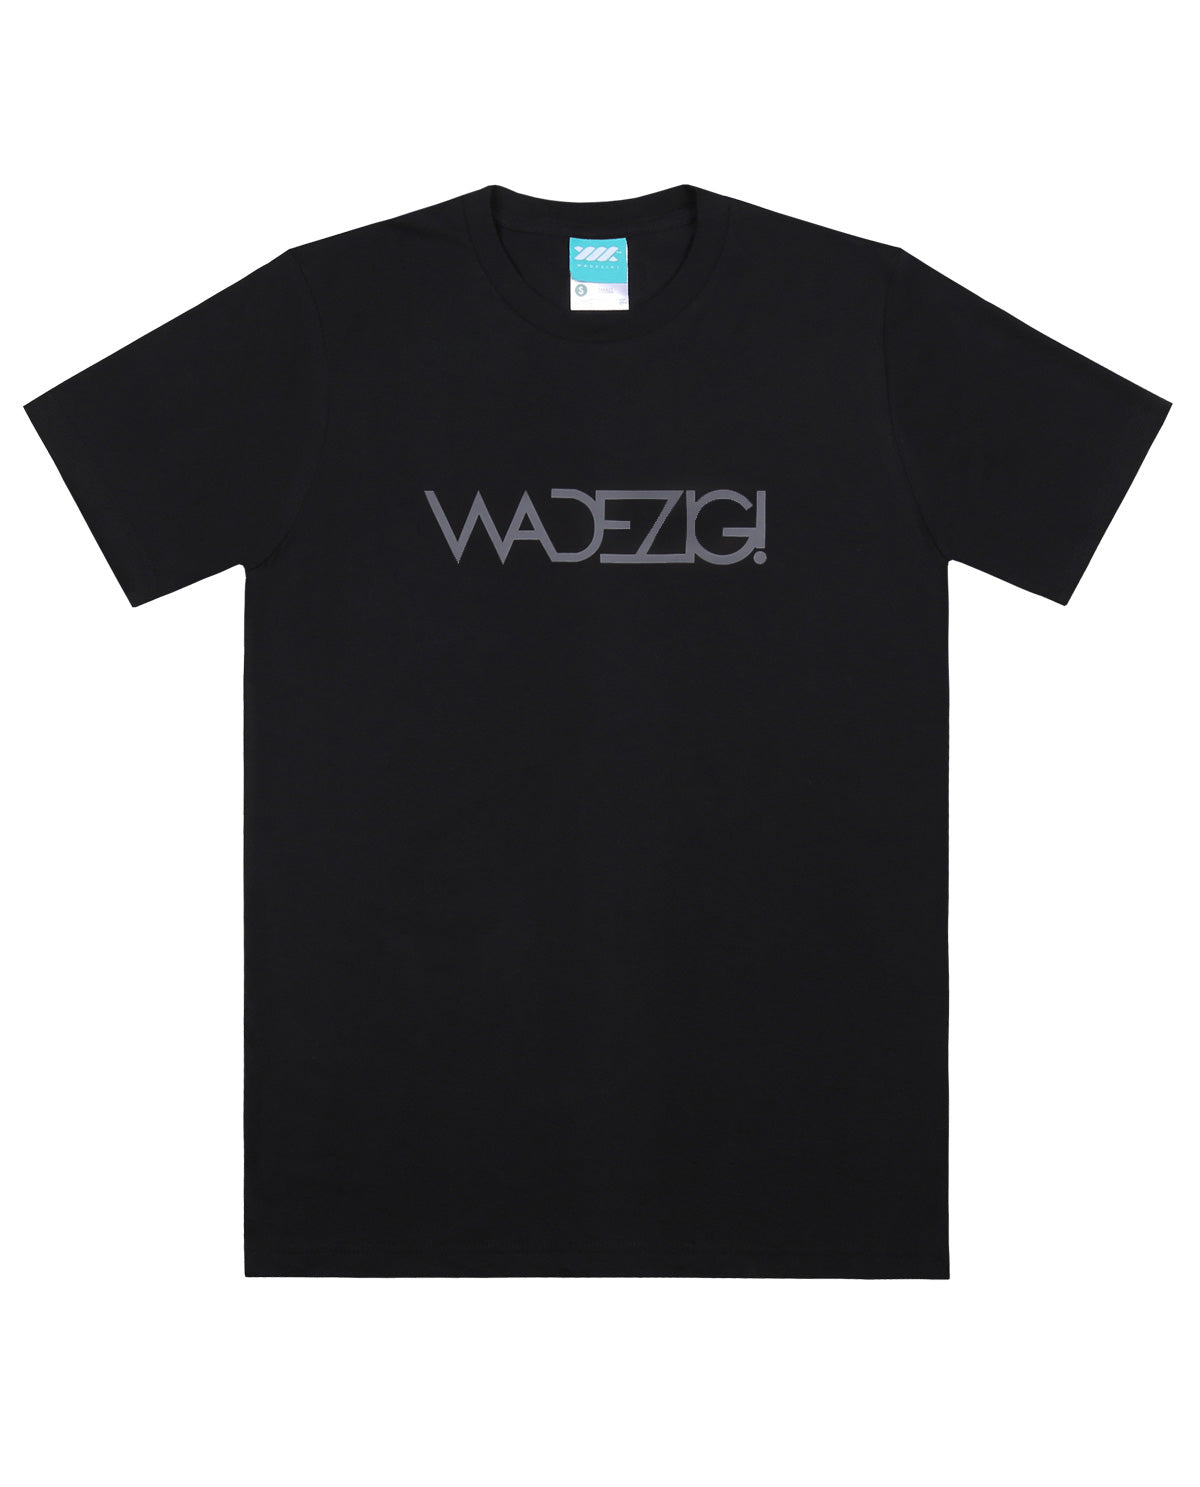 Wadezig! T-Shirt - Redline Black